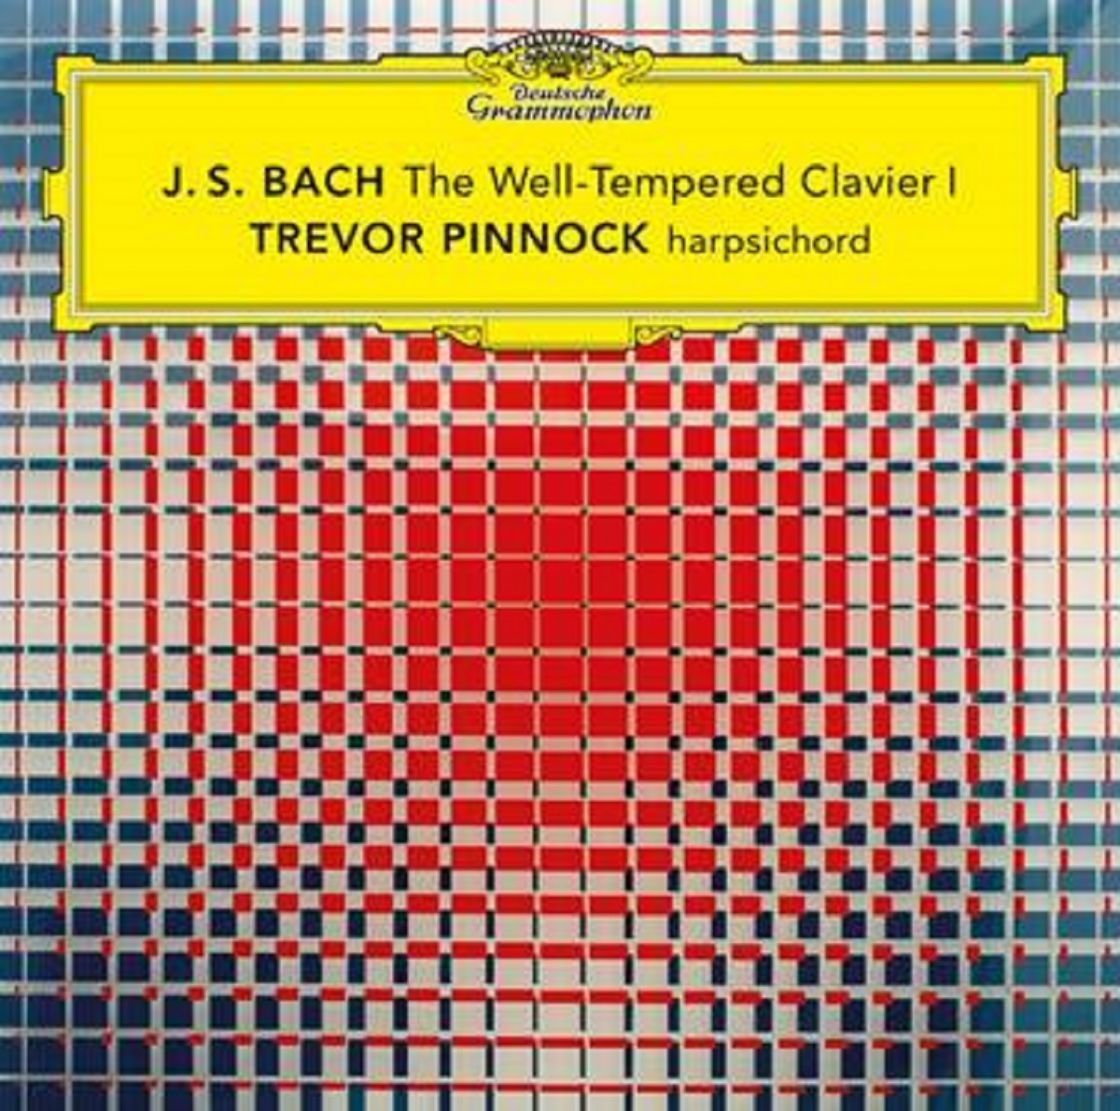 J. S. BACH - The Well-Tempered Clavier I  - TREVOR PINNOCK,klawesyn